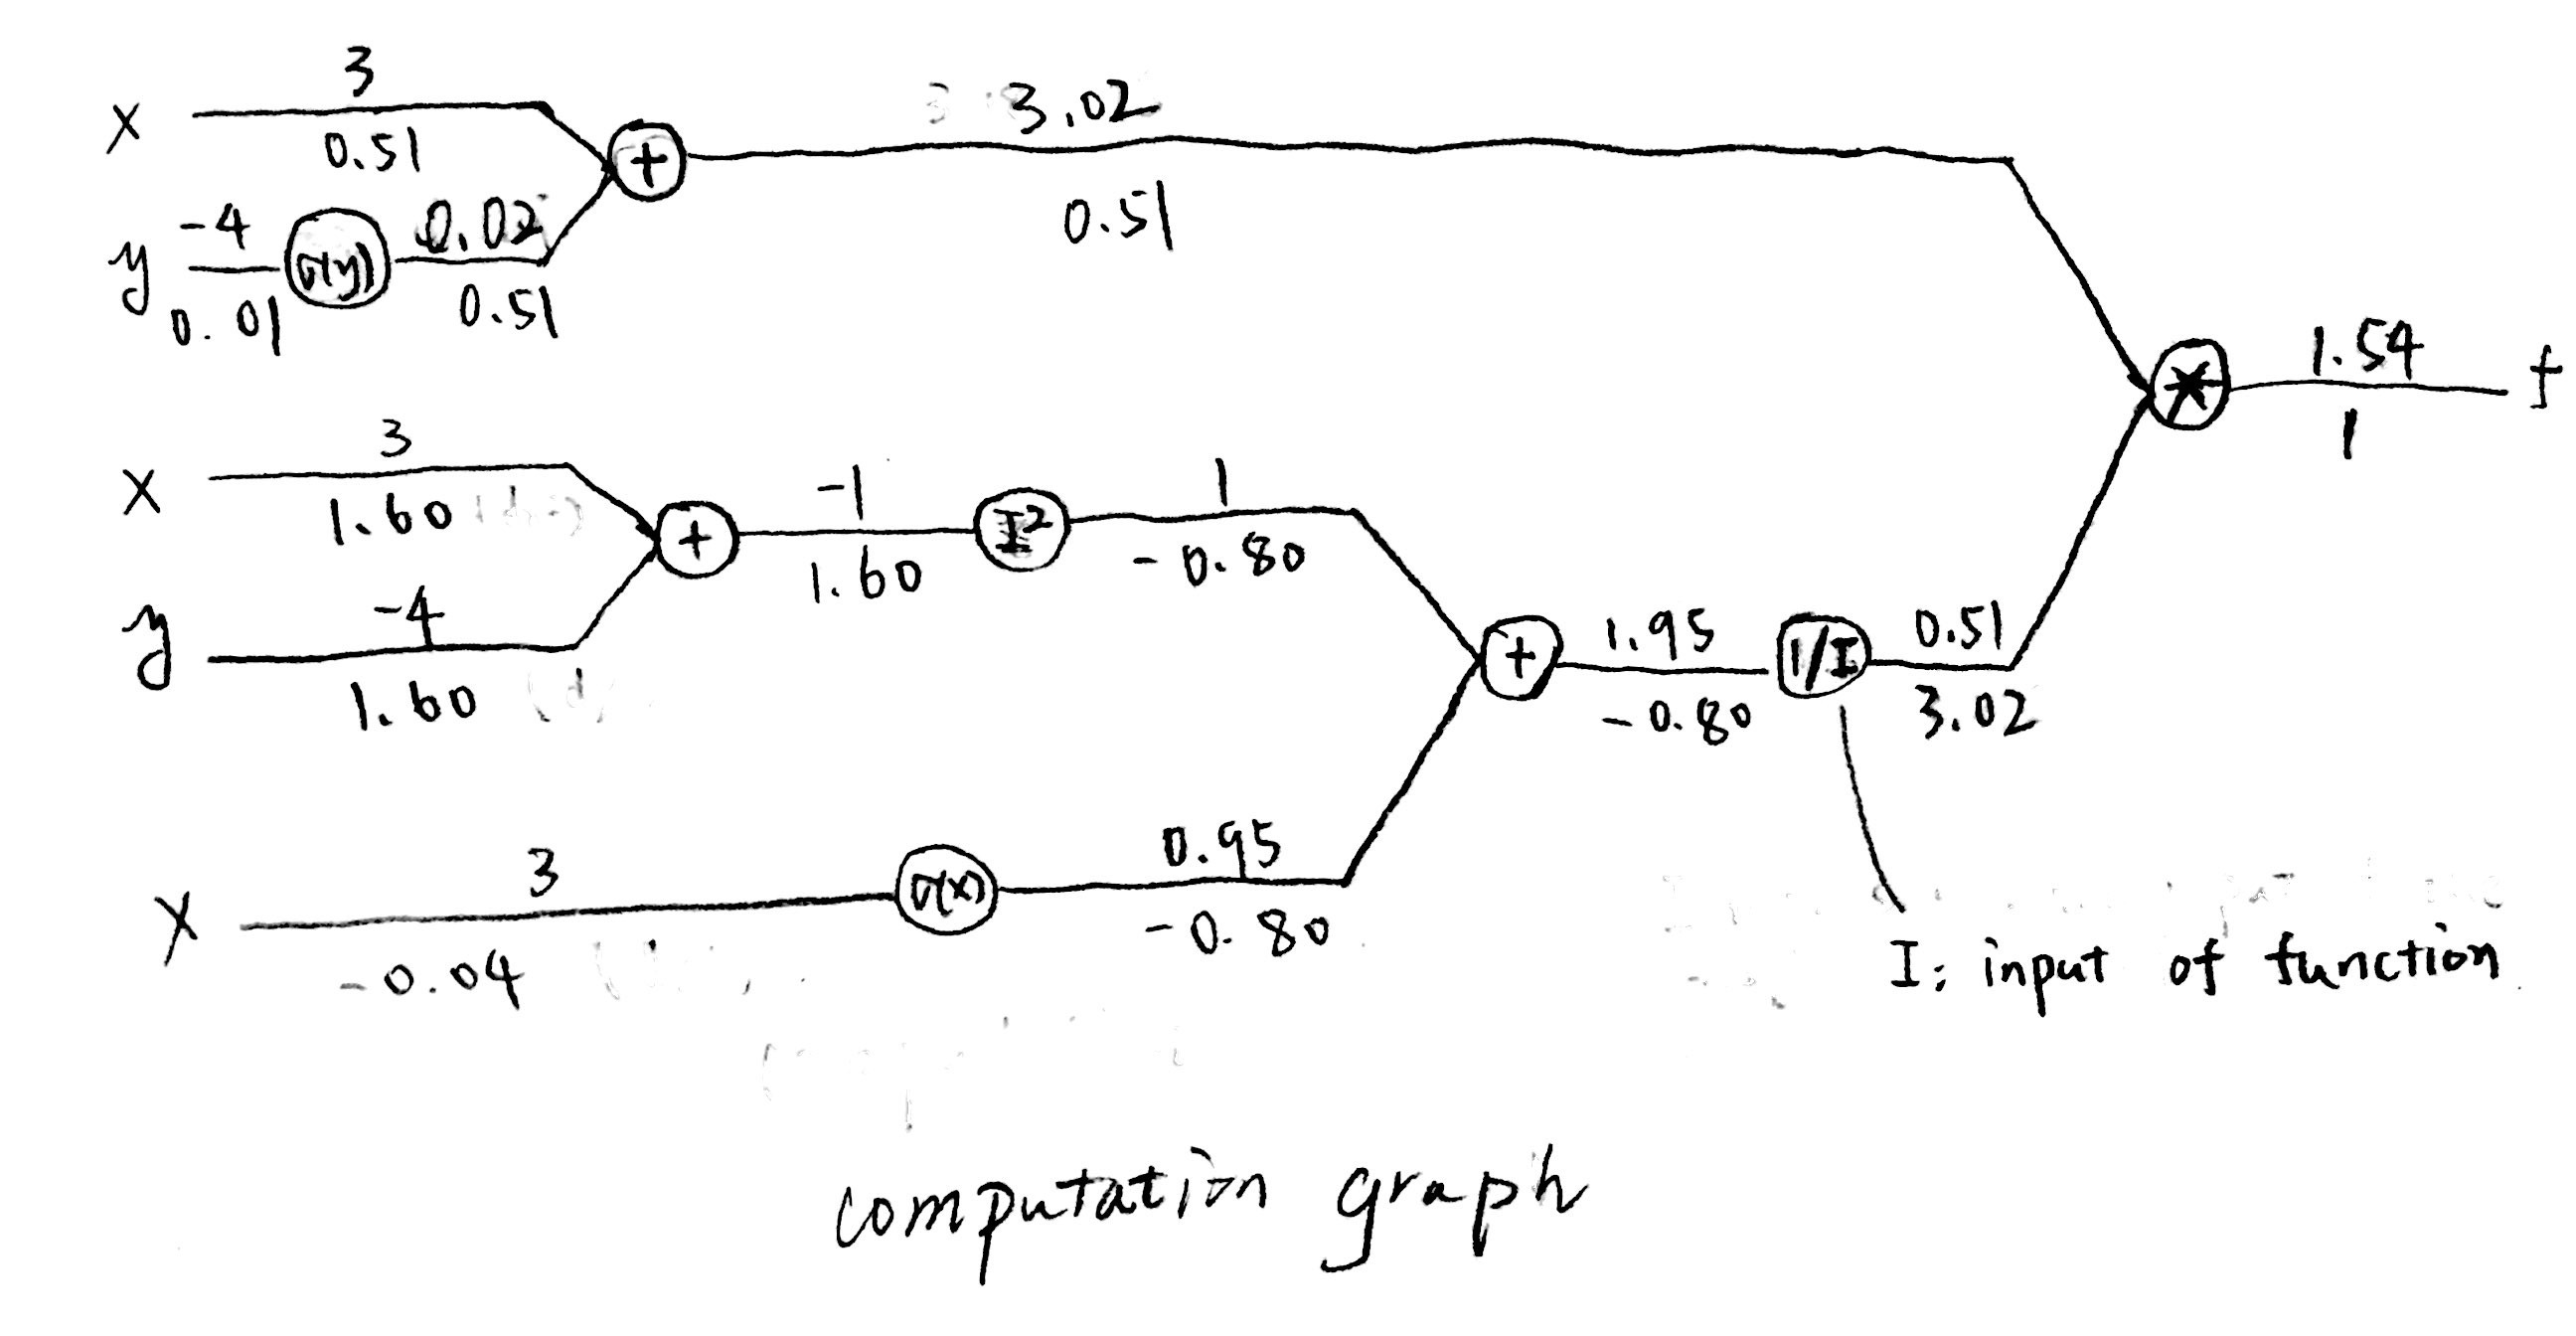 Computational Graph of BackPropogation